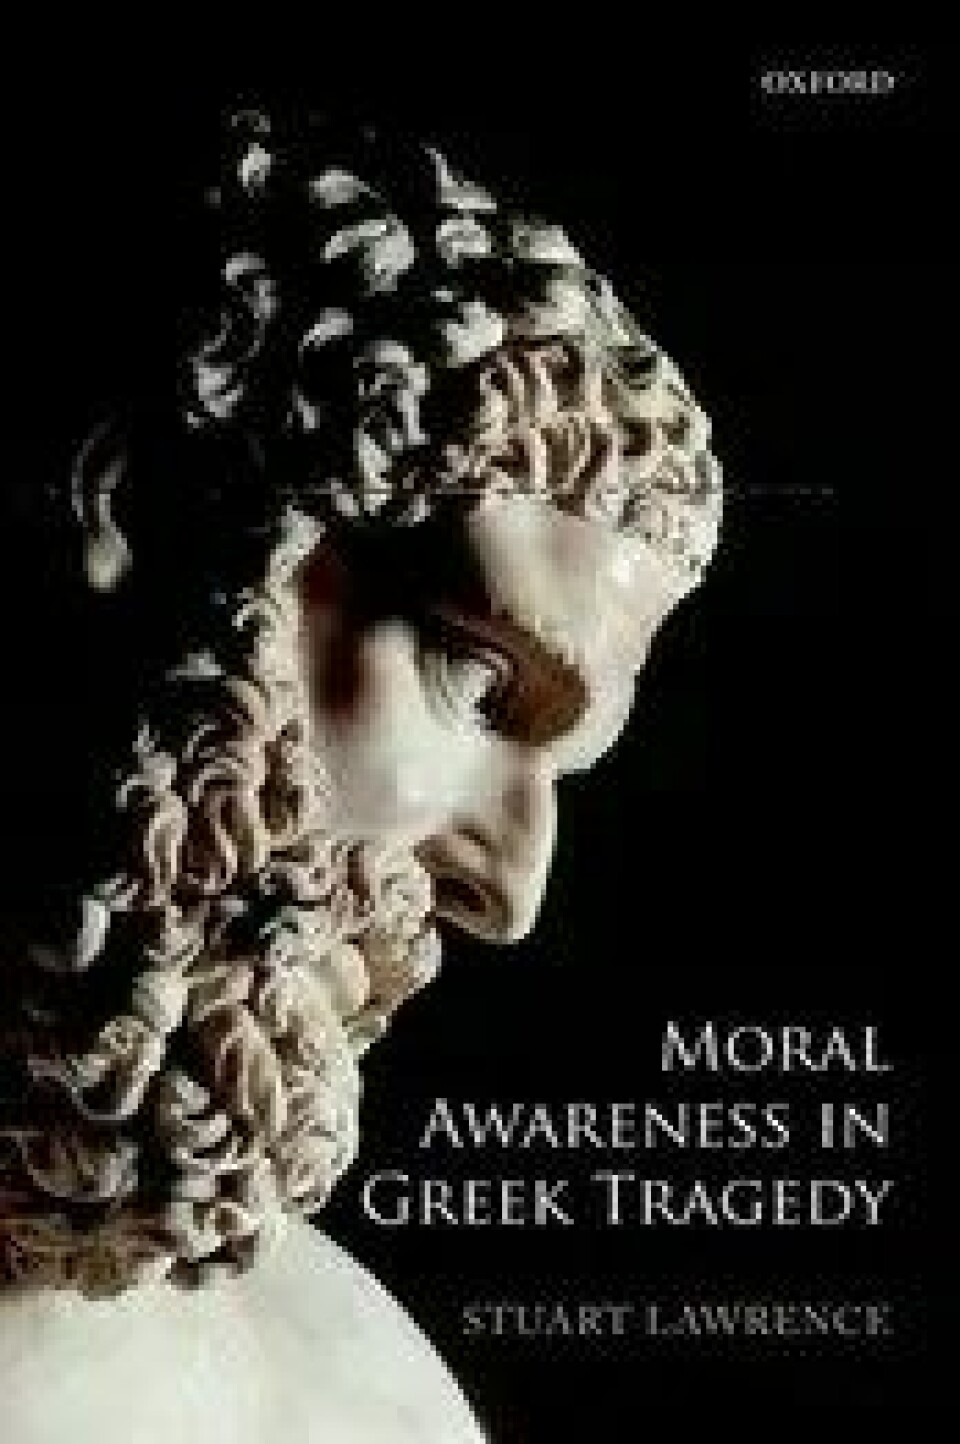 Moral Awareness in Greek Tragedy, Stuart Lawrence (Oxford University Press, 2013)